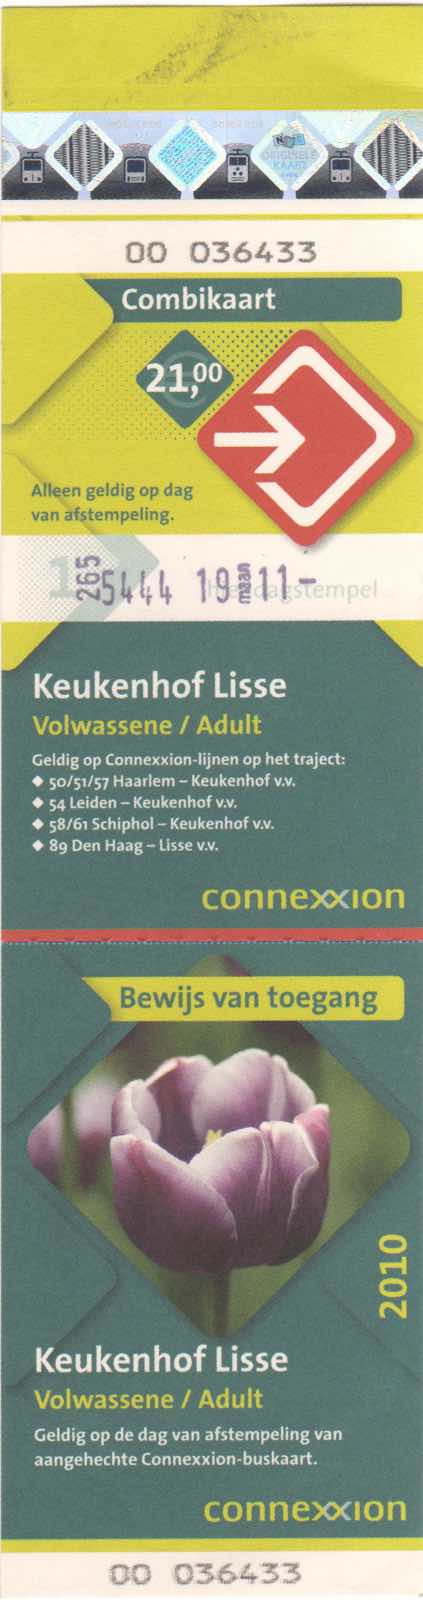 ticket for Connexxion bus and entrance to Keukenhof (2010)